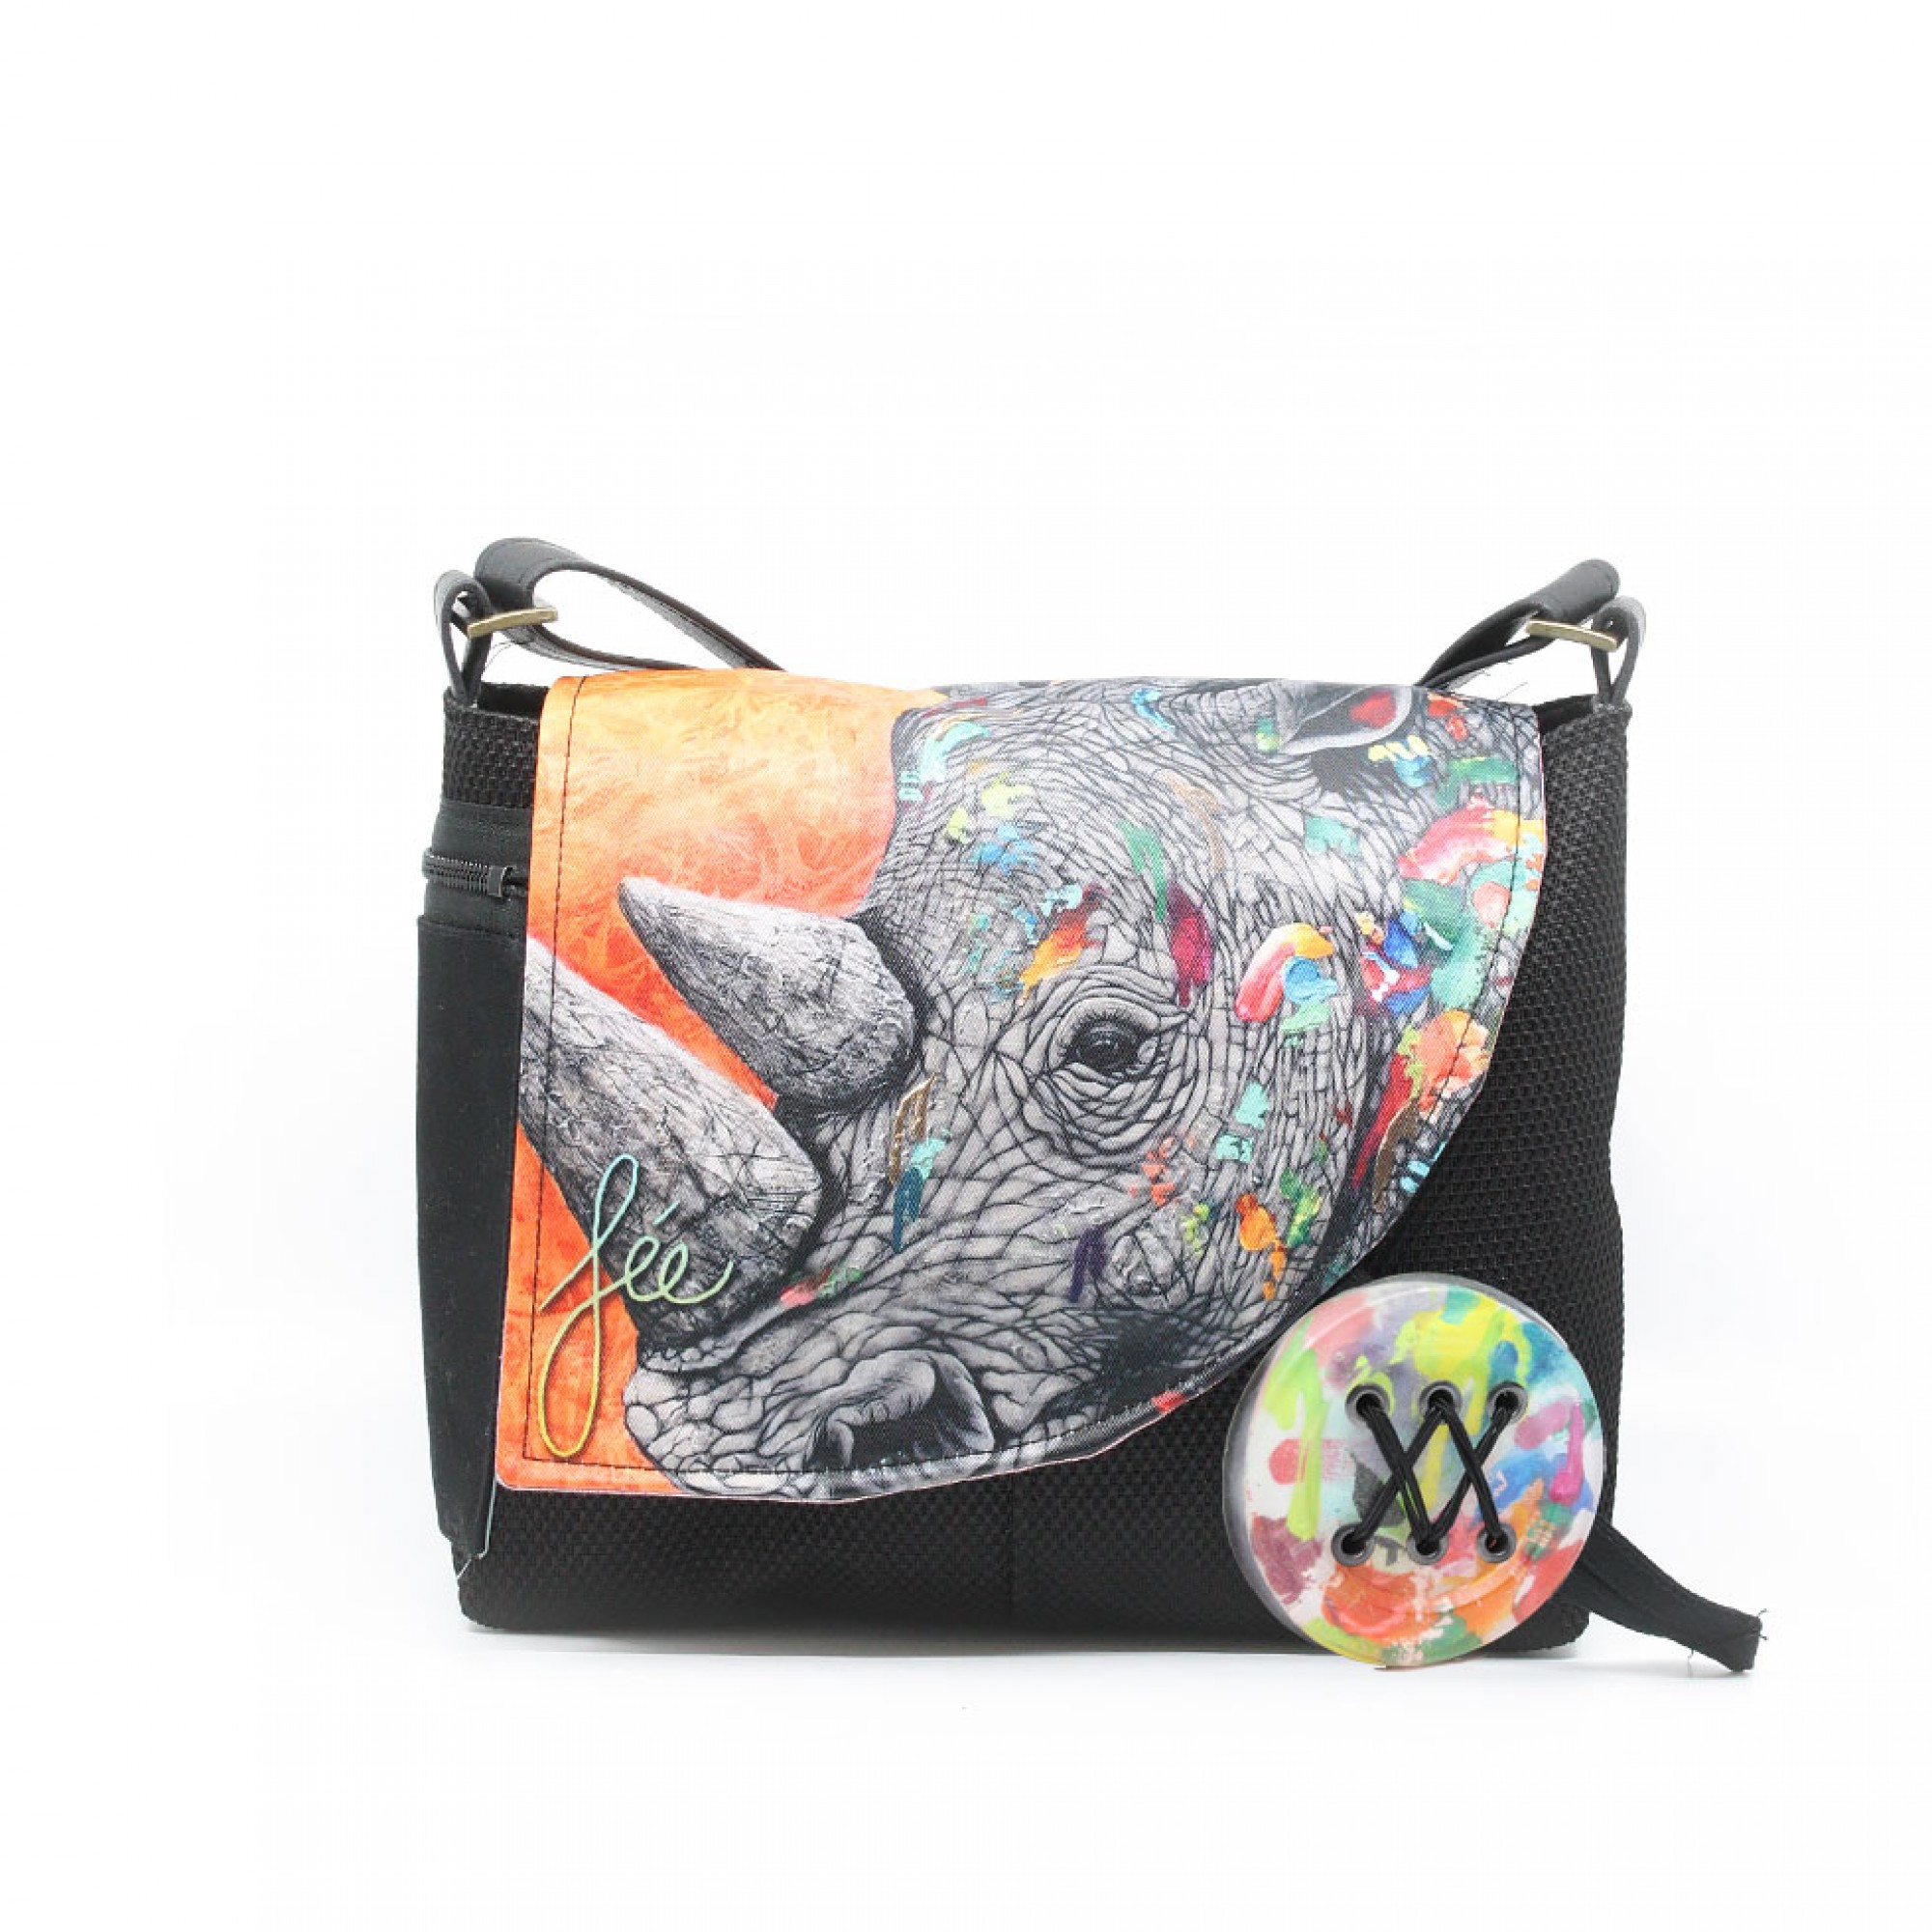 Chipie QuARTz Special Edition | Colorful shoulder bag with rhinoceros